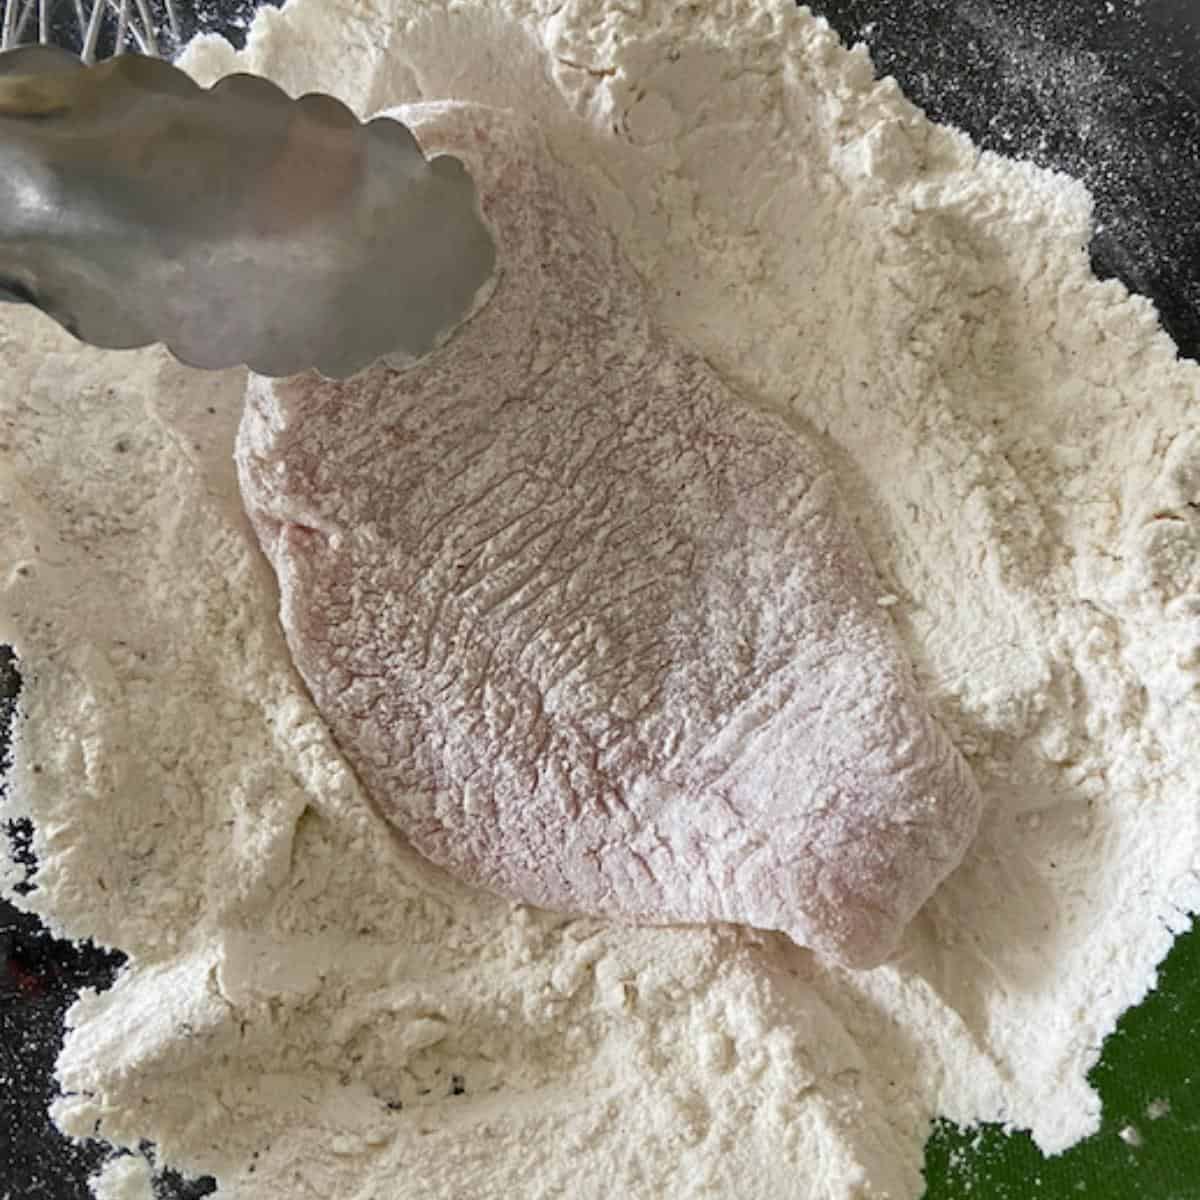 tongs coating chicken in flour mixture